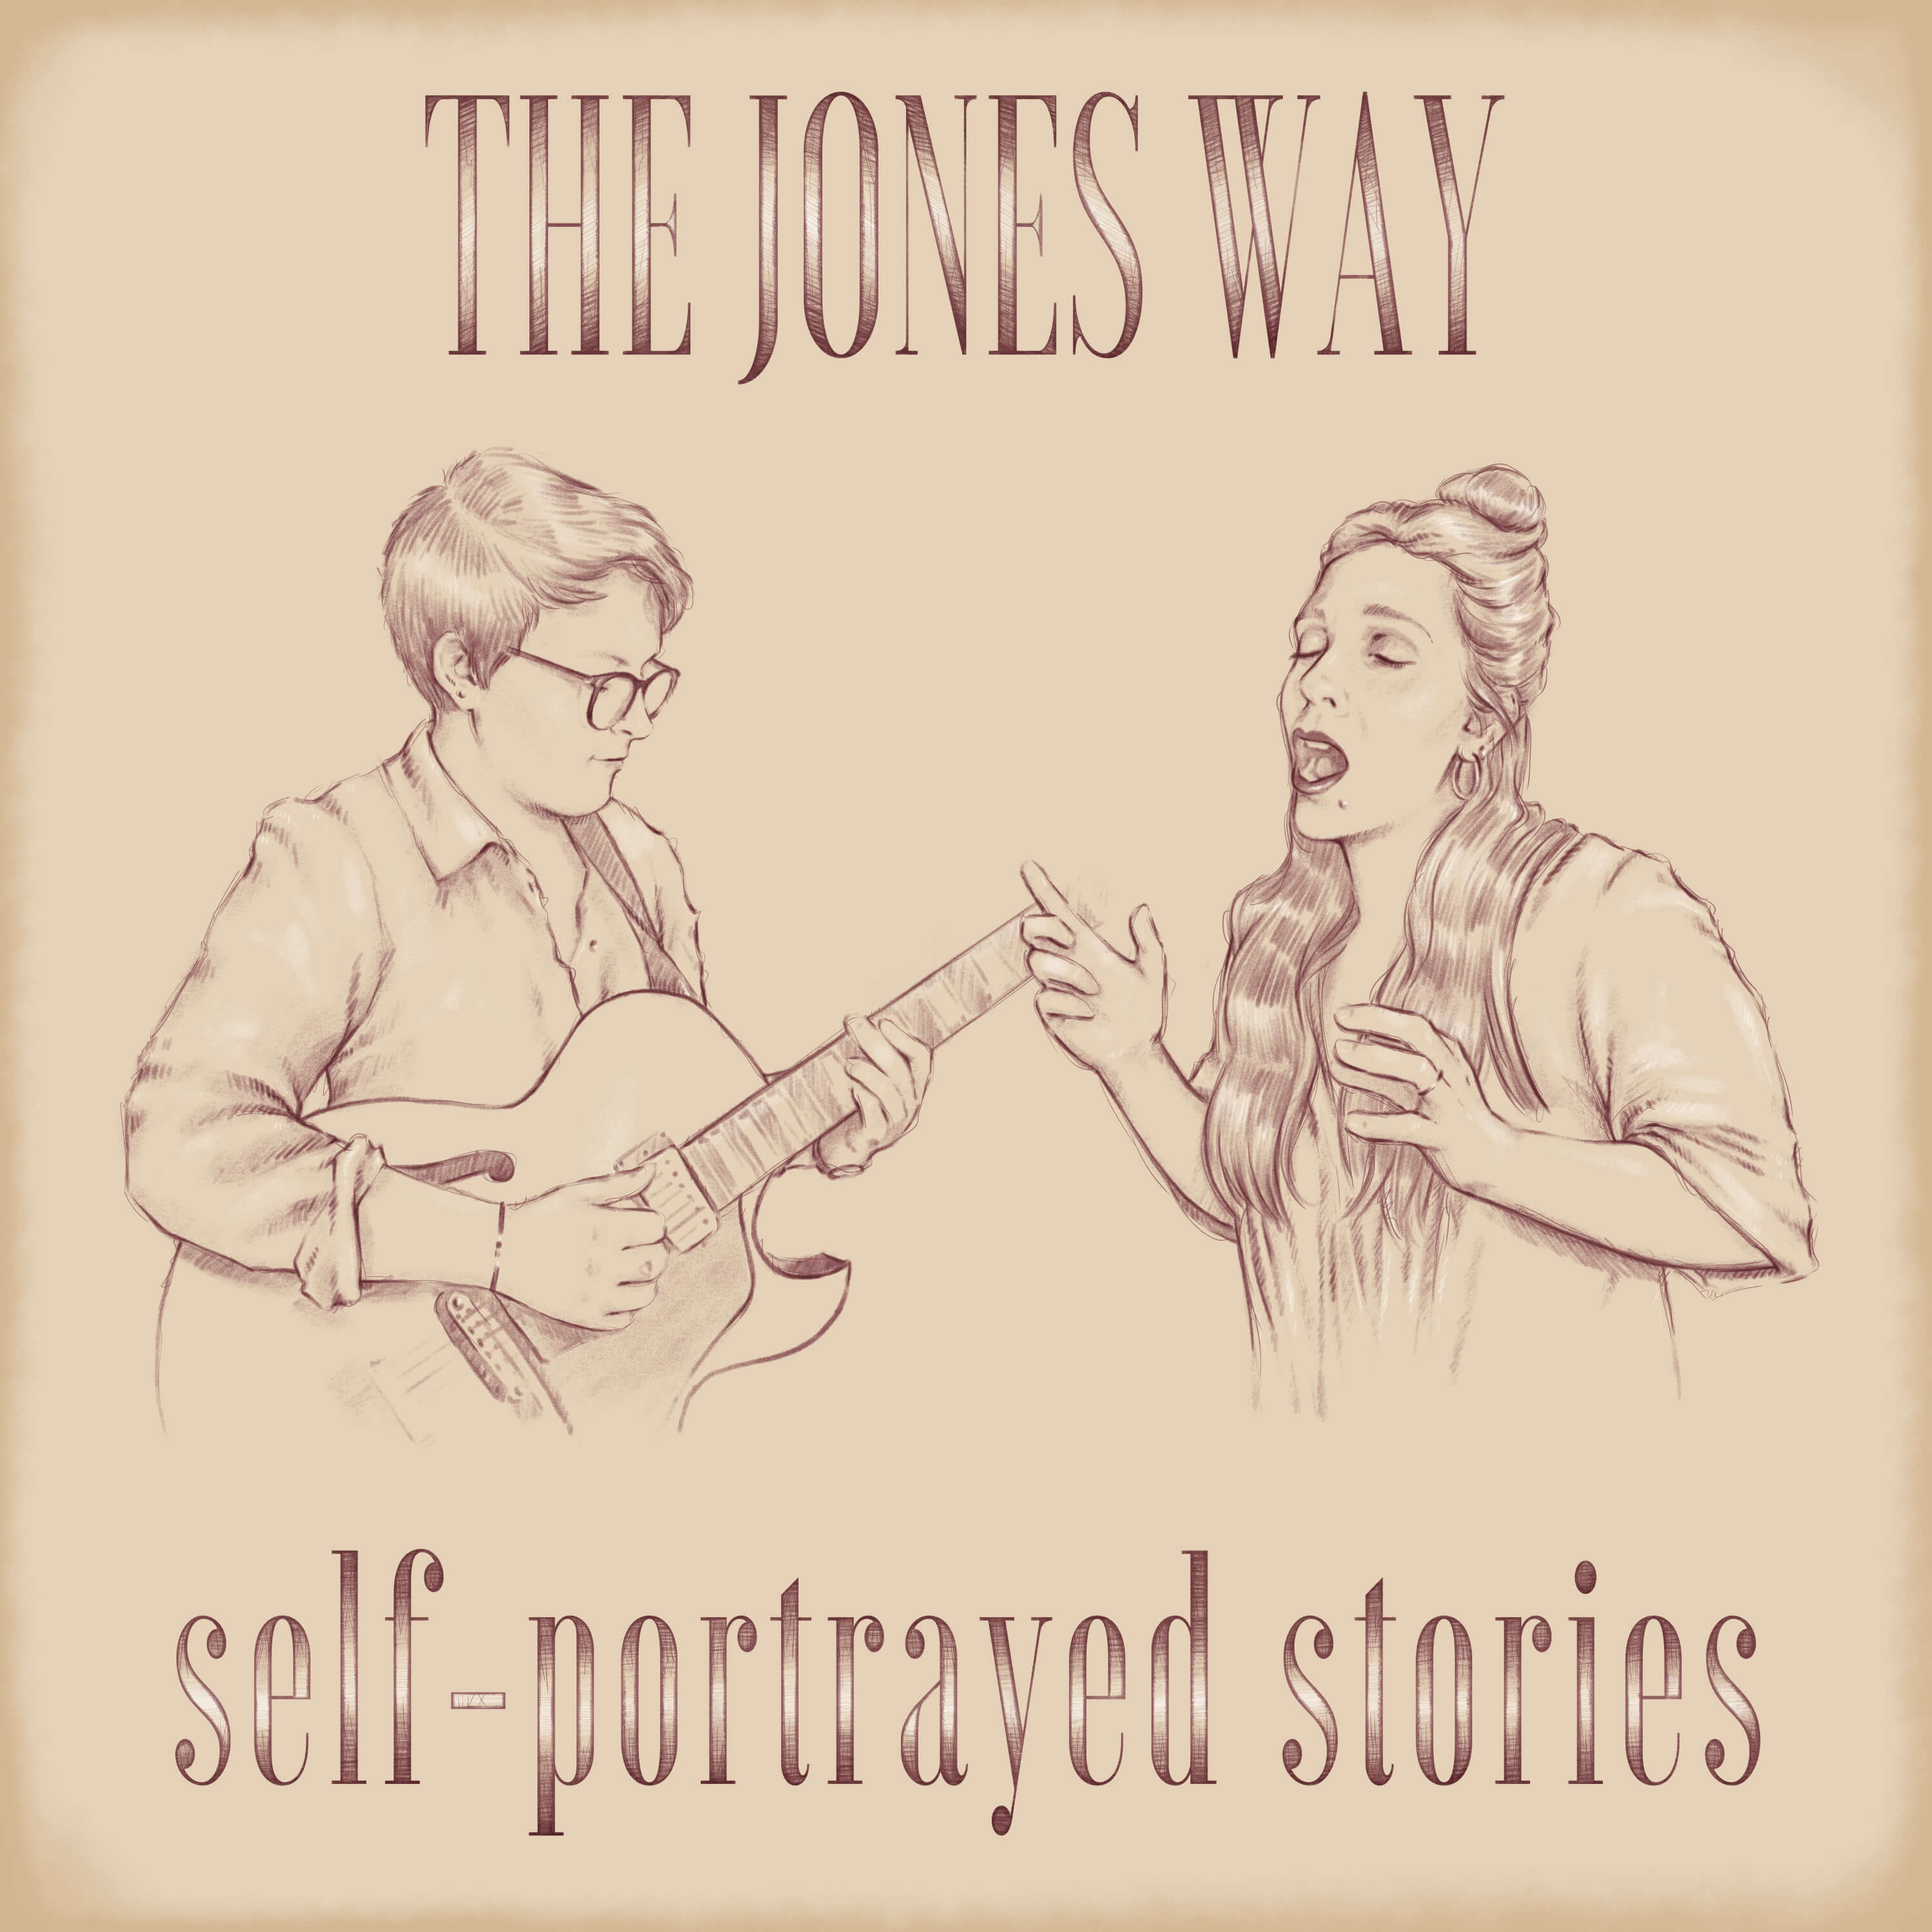 The Jones Way announces new EP “Self-Portrayed Stories”